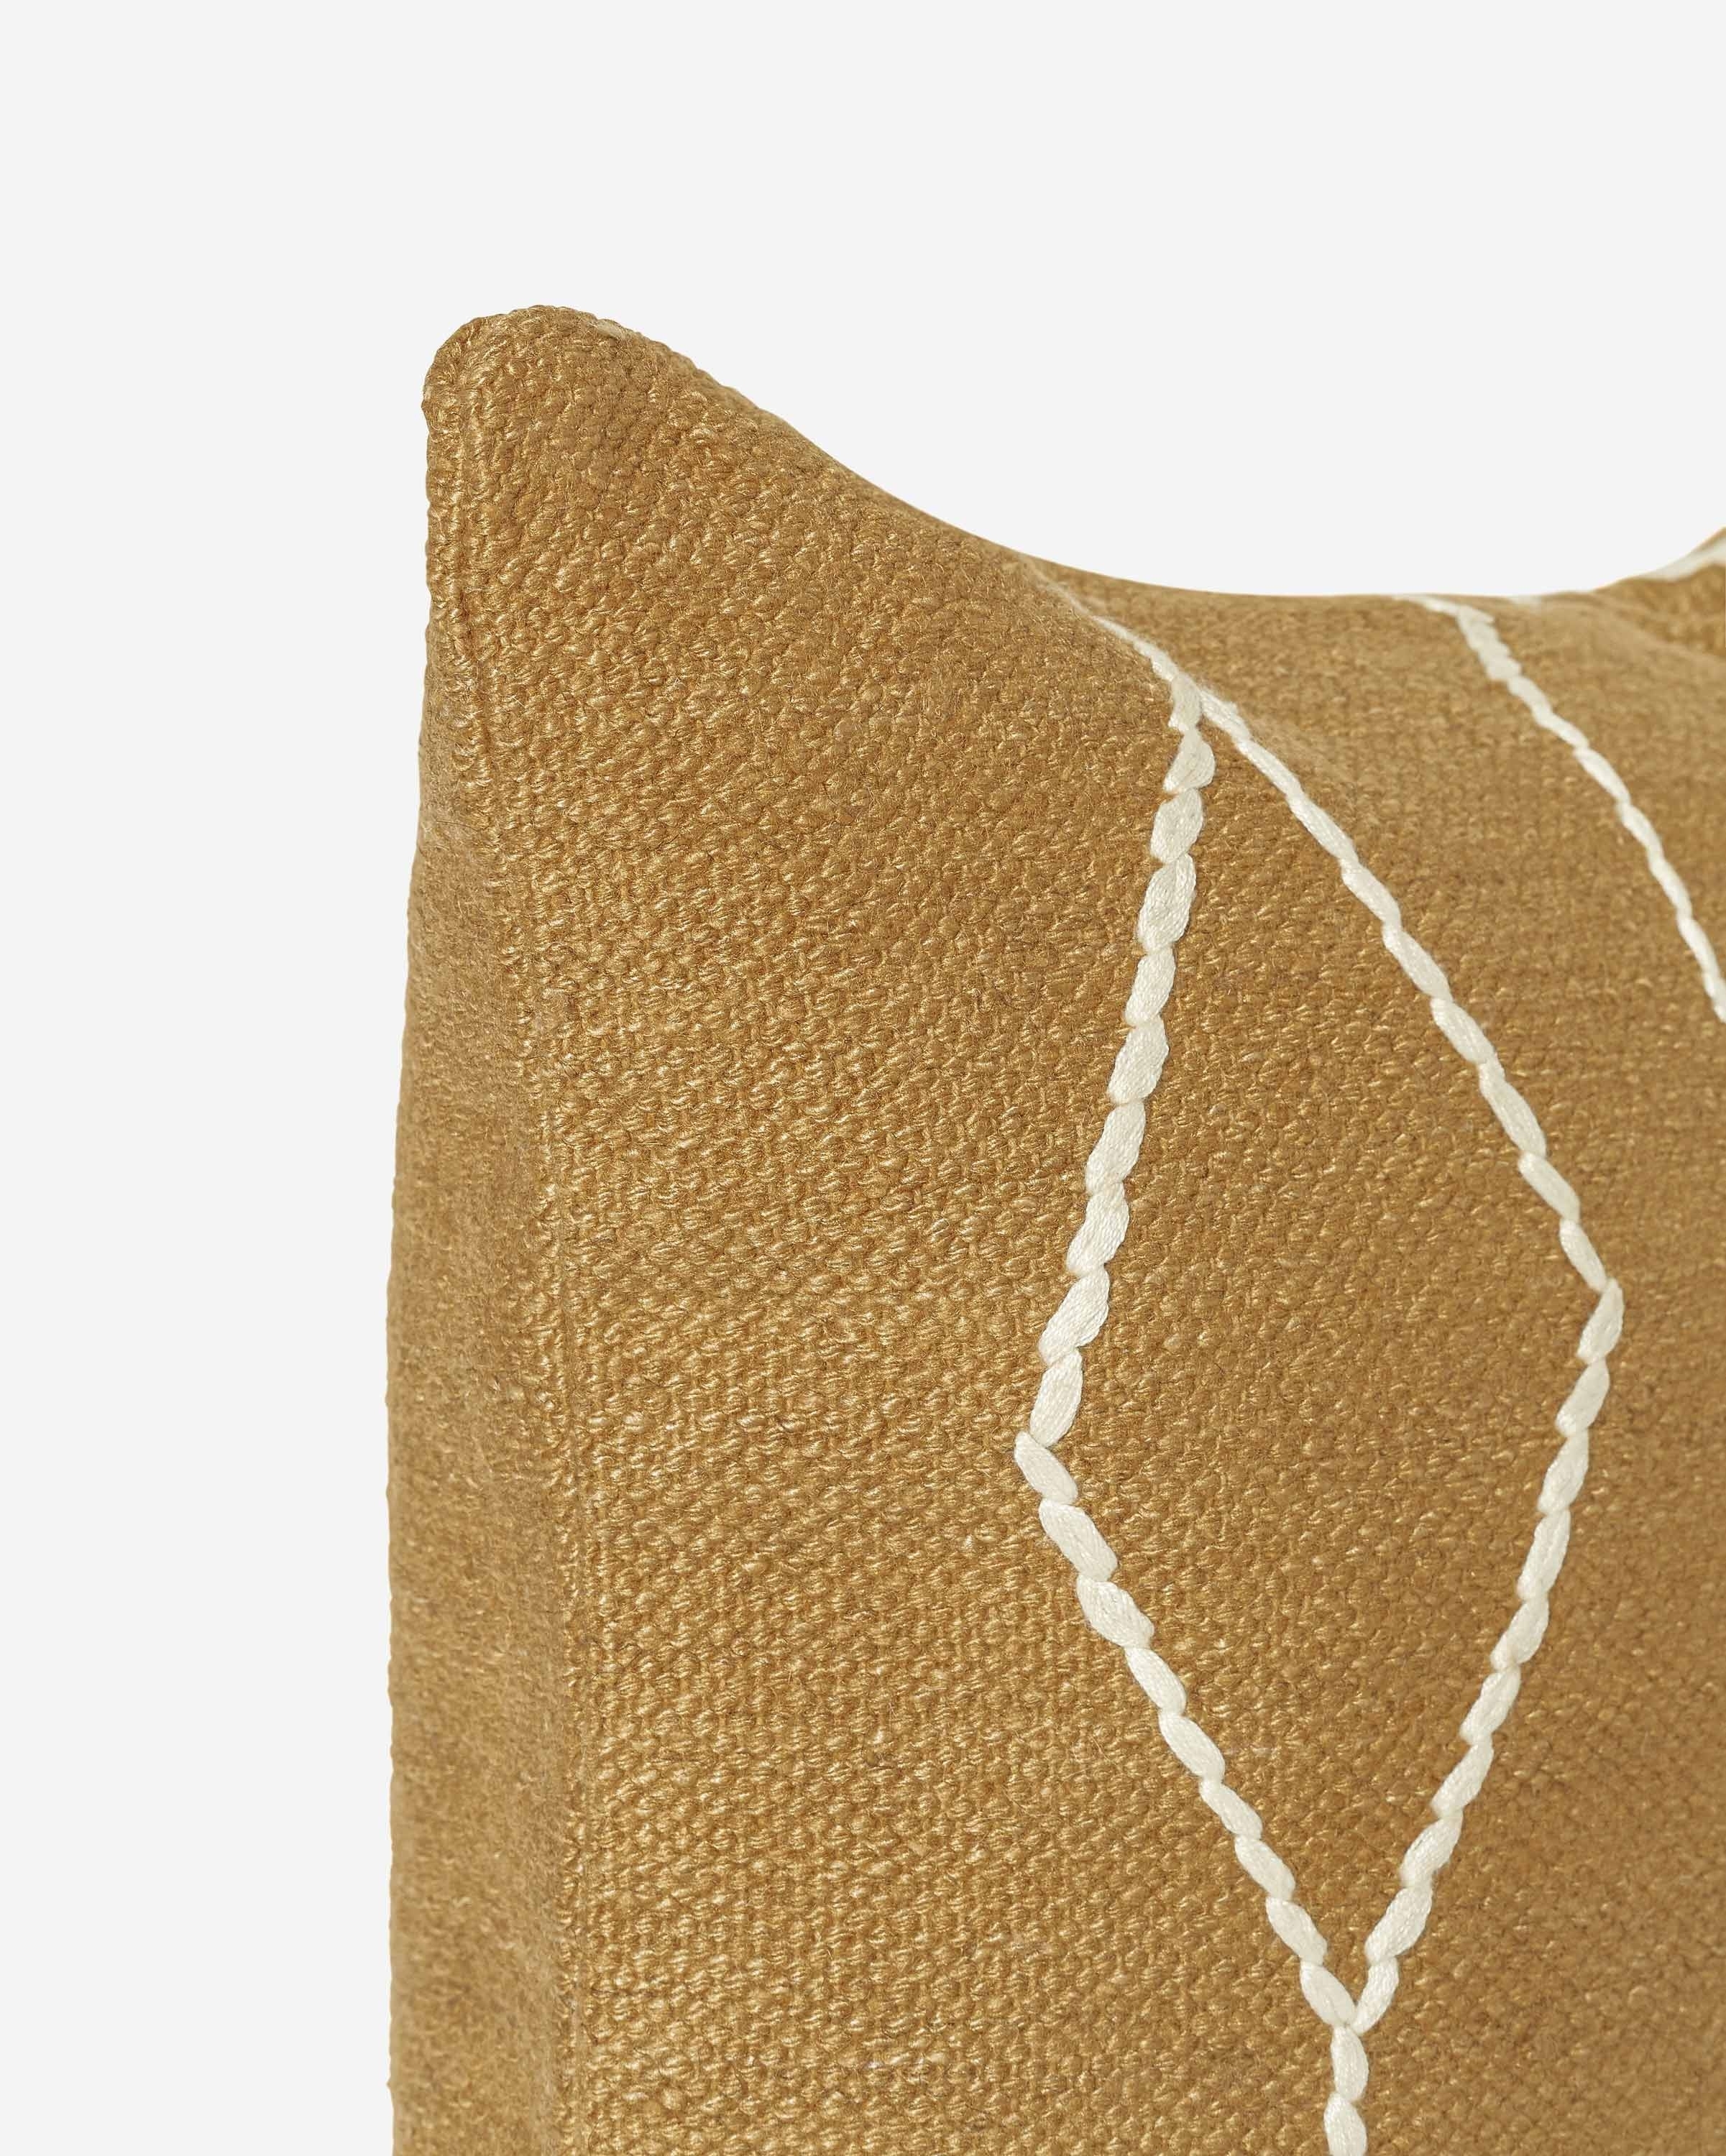 Moroccan Flatweave Pillow By Sarah Sherman Samuel, Ochre, 20" x 20" - Image 1